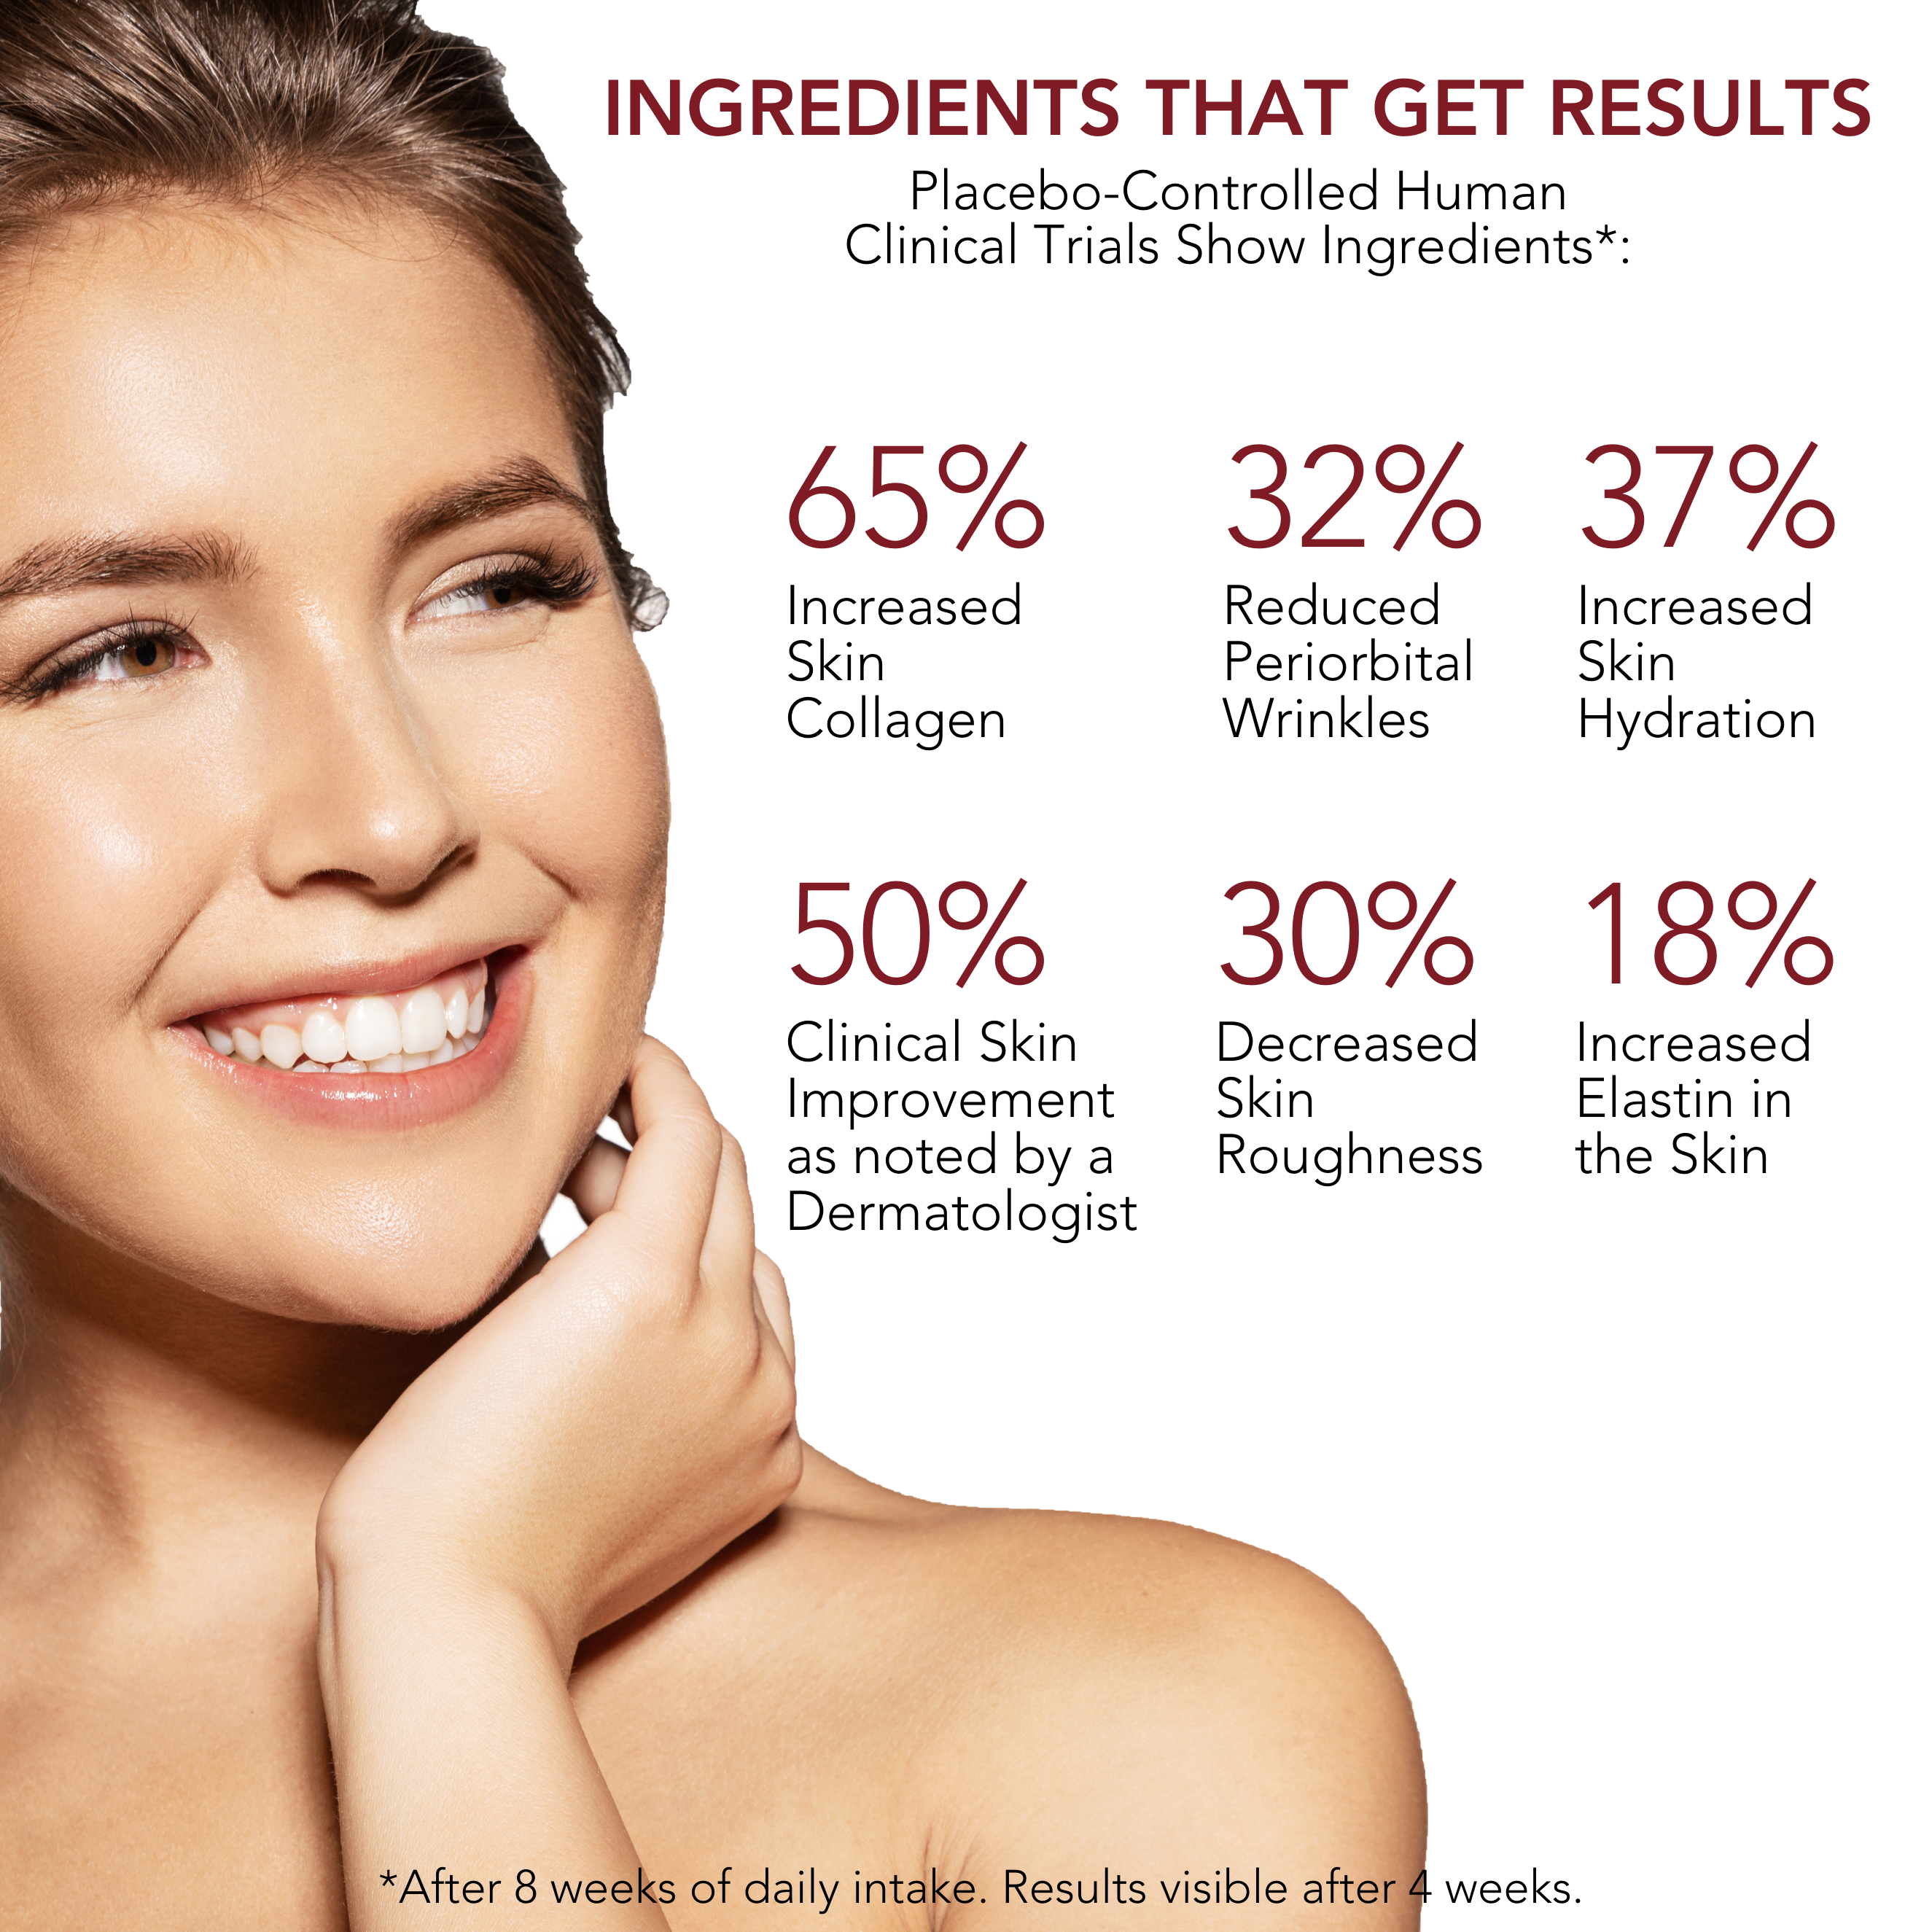 HealFast Rejuvenate: Healthy Aging Skin & Beauty Supplement WS